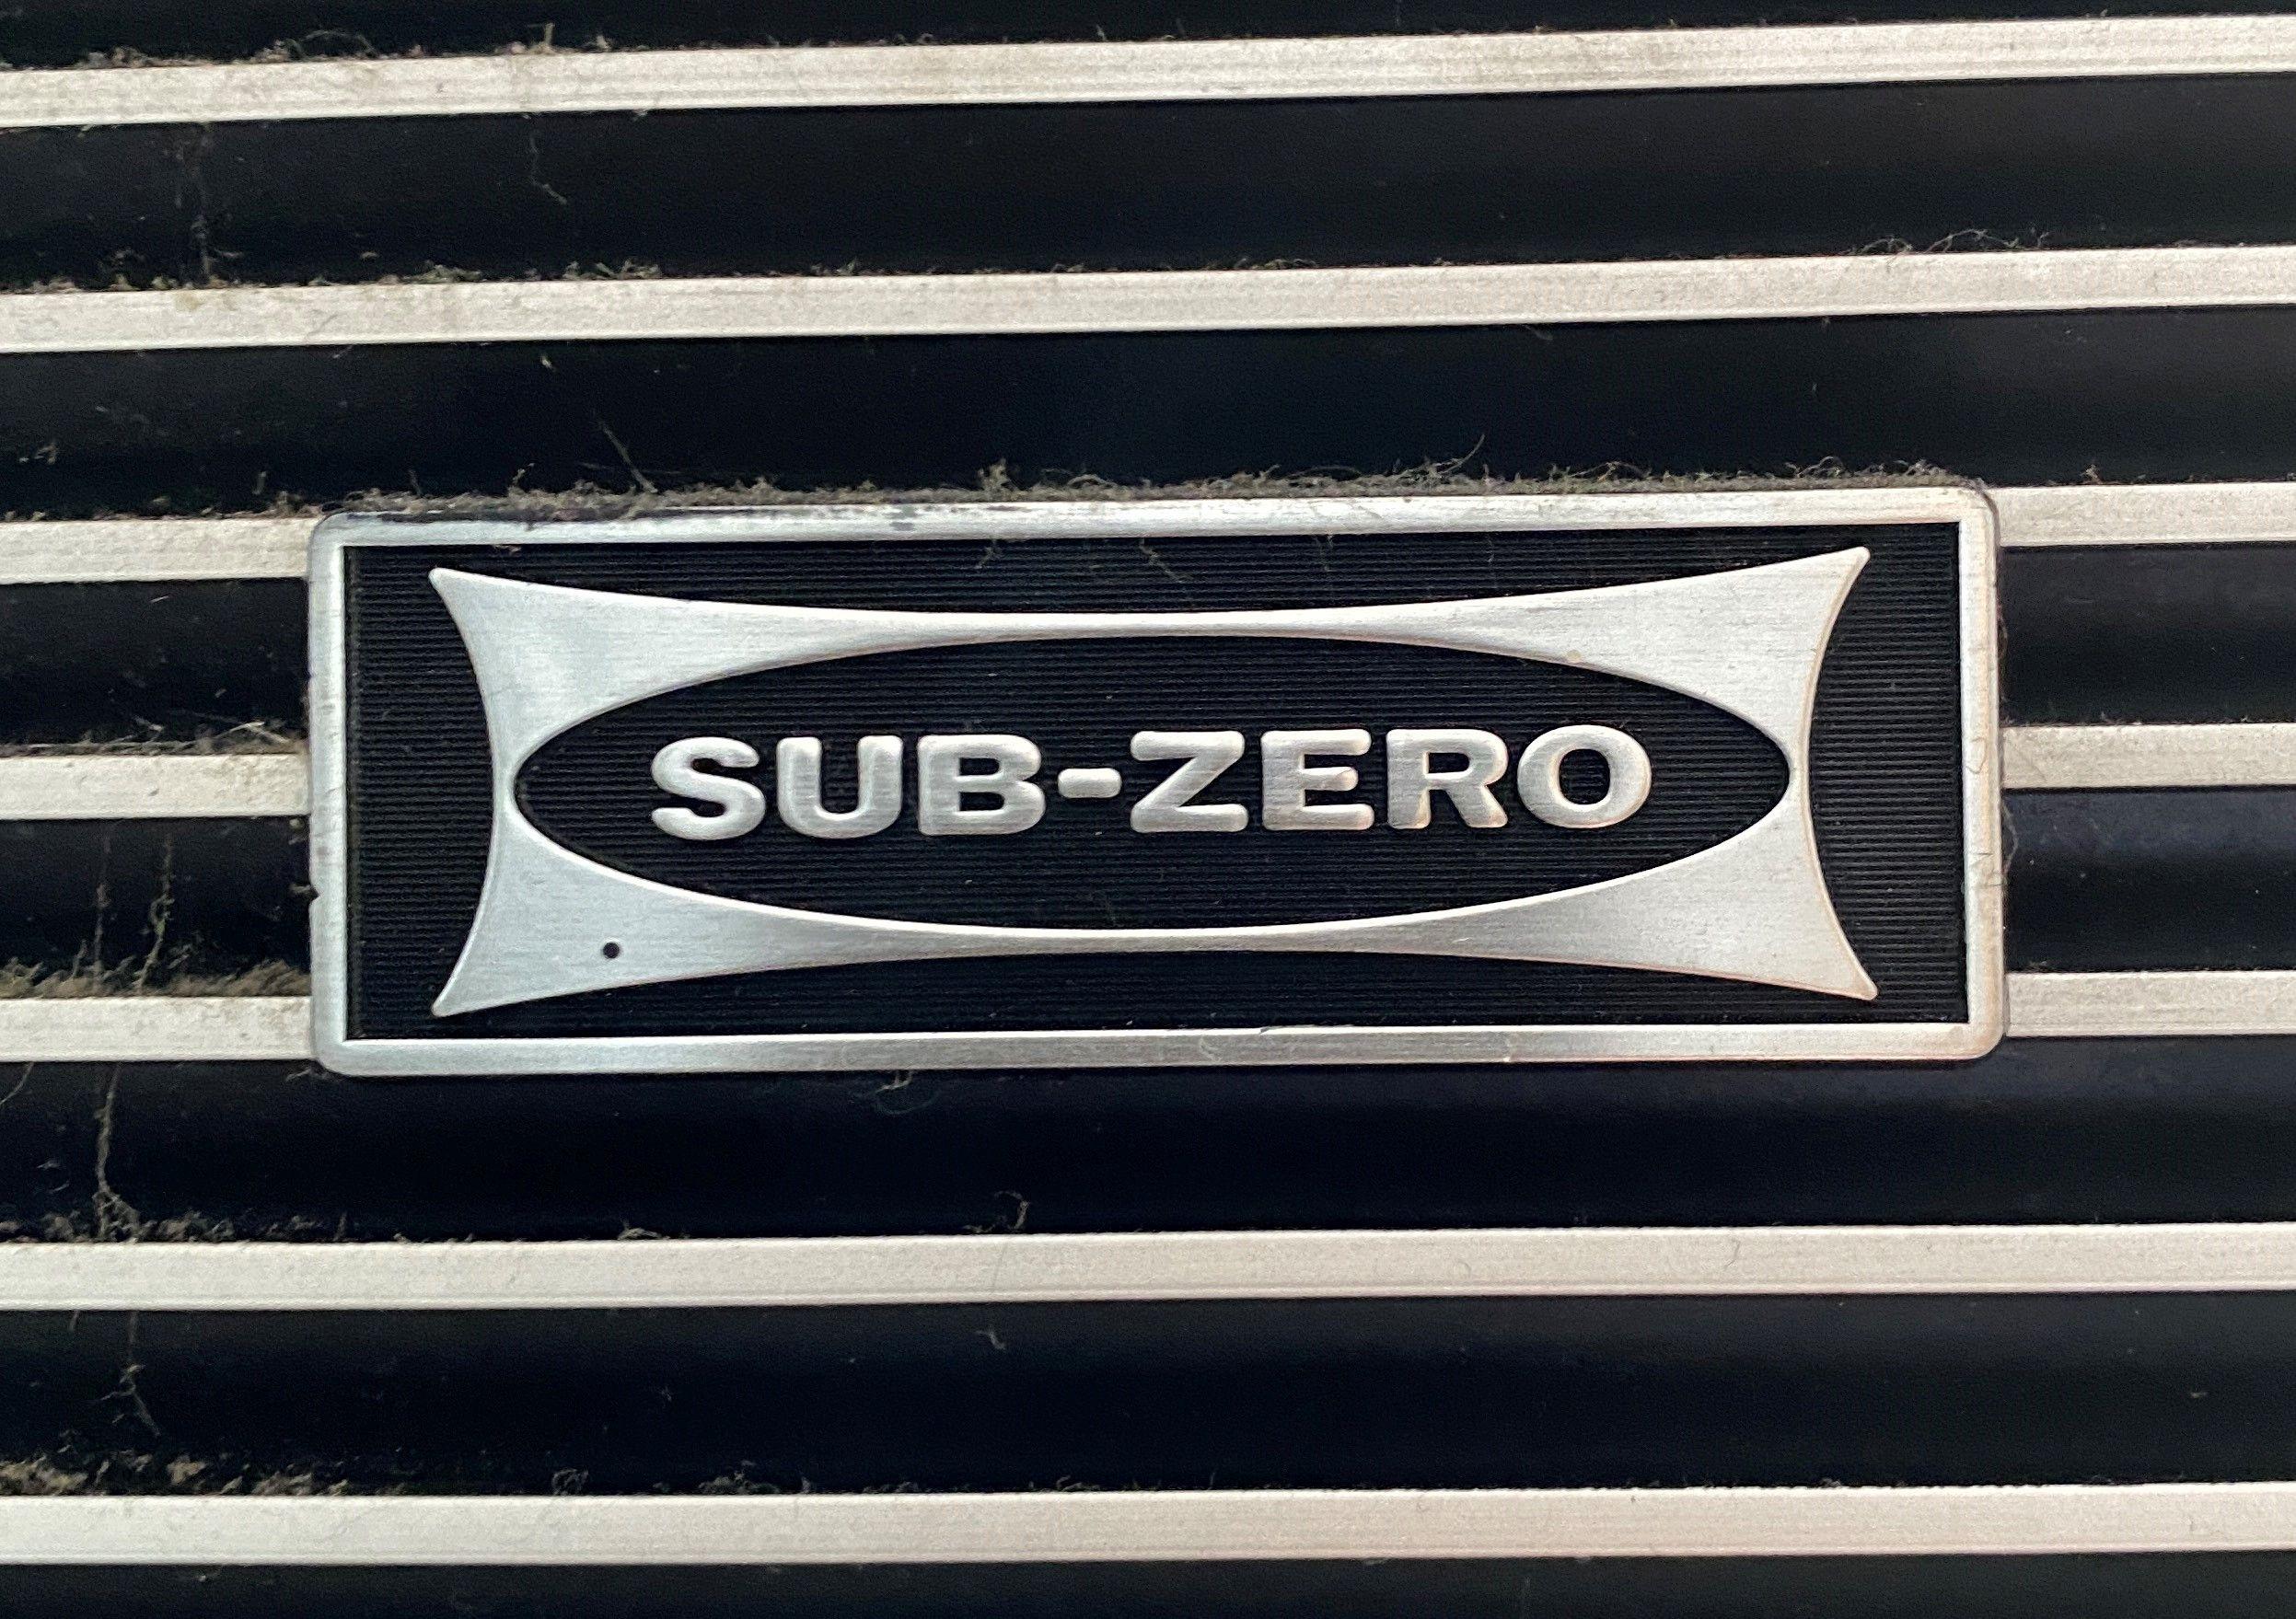 Stainless Steel Finish Sub-Zero model 532 Refrigerator/Freezer